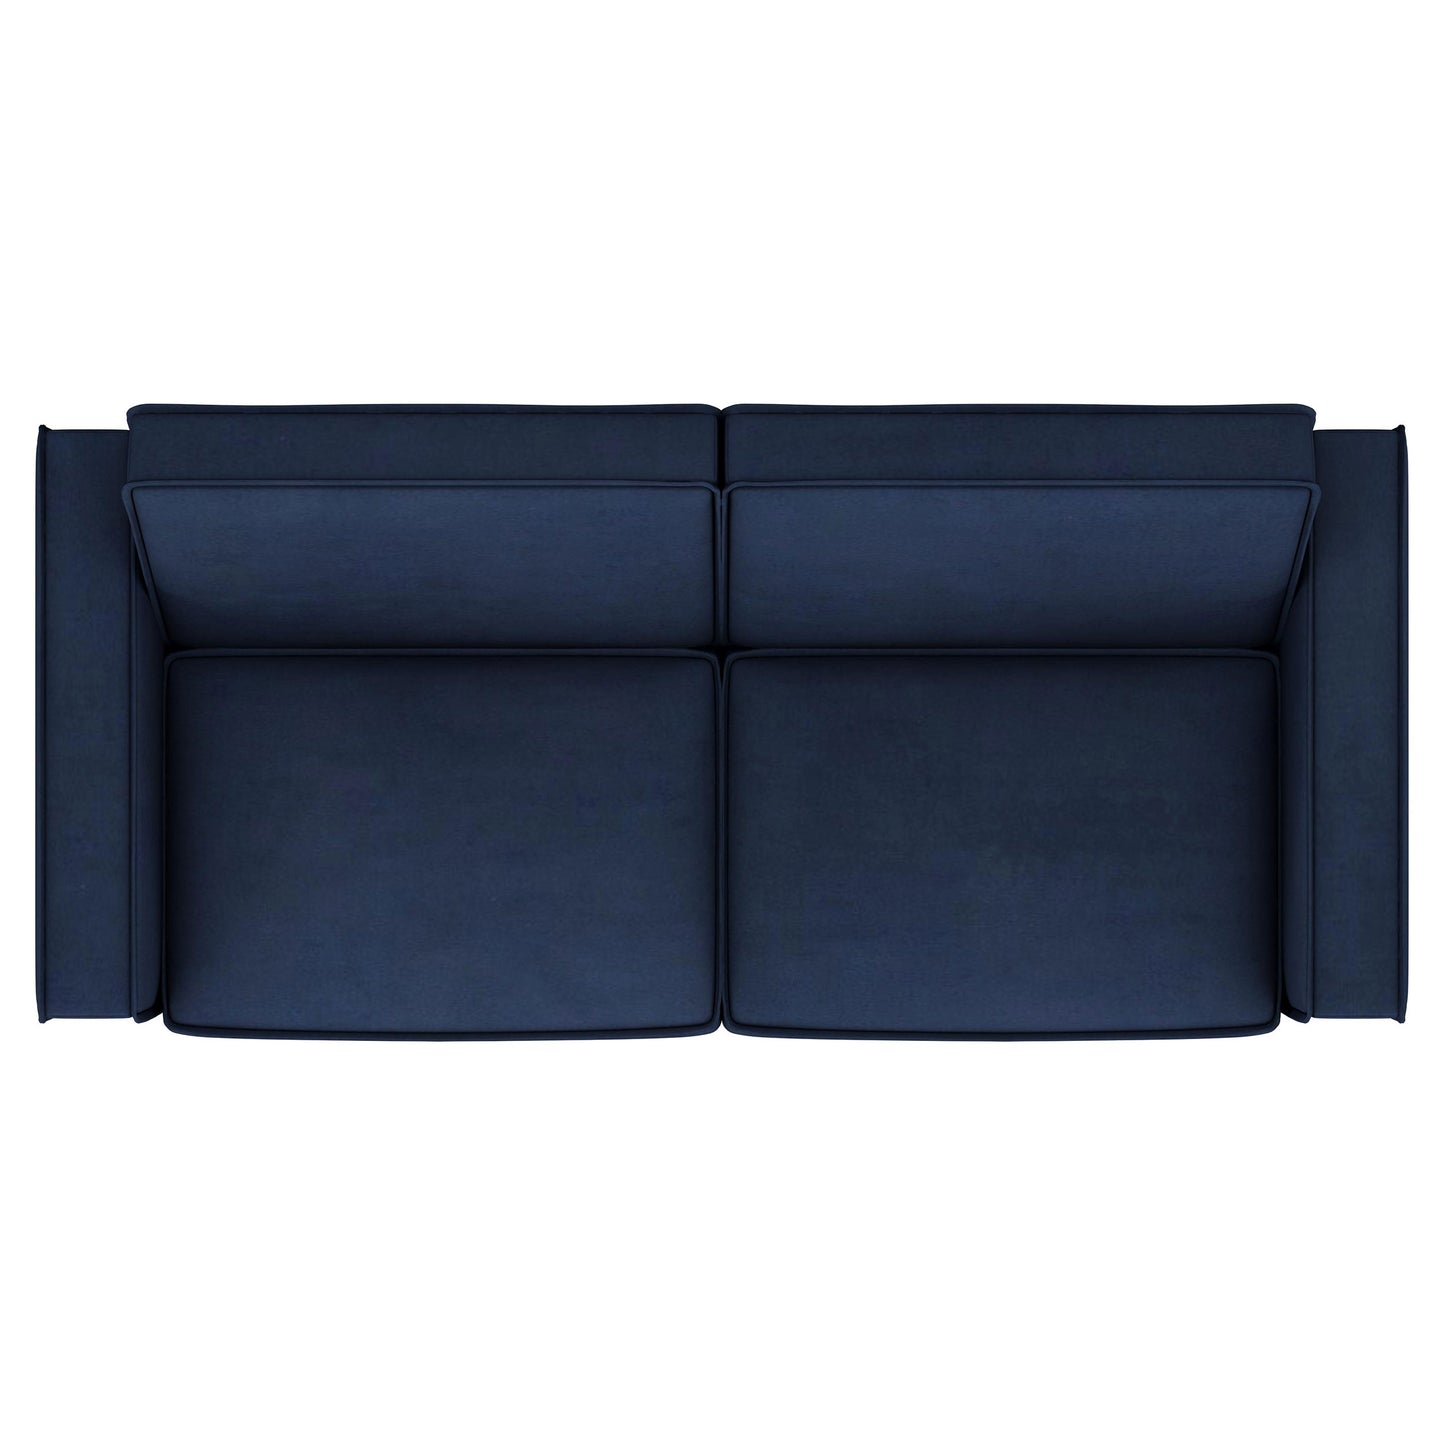 Gretchen Multipurpose Upholstered Convertible Sleeper Sofa Bed Navy Blue